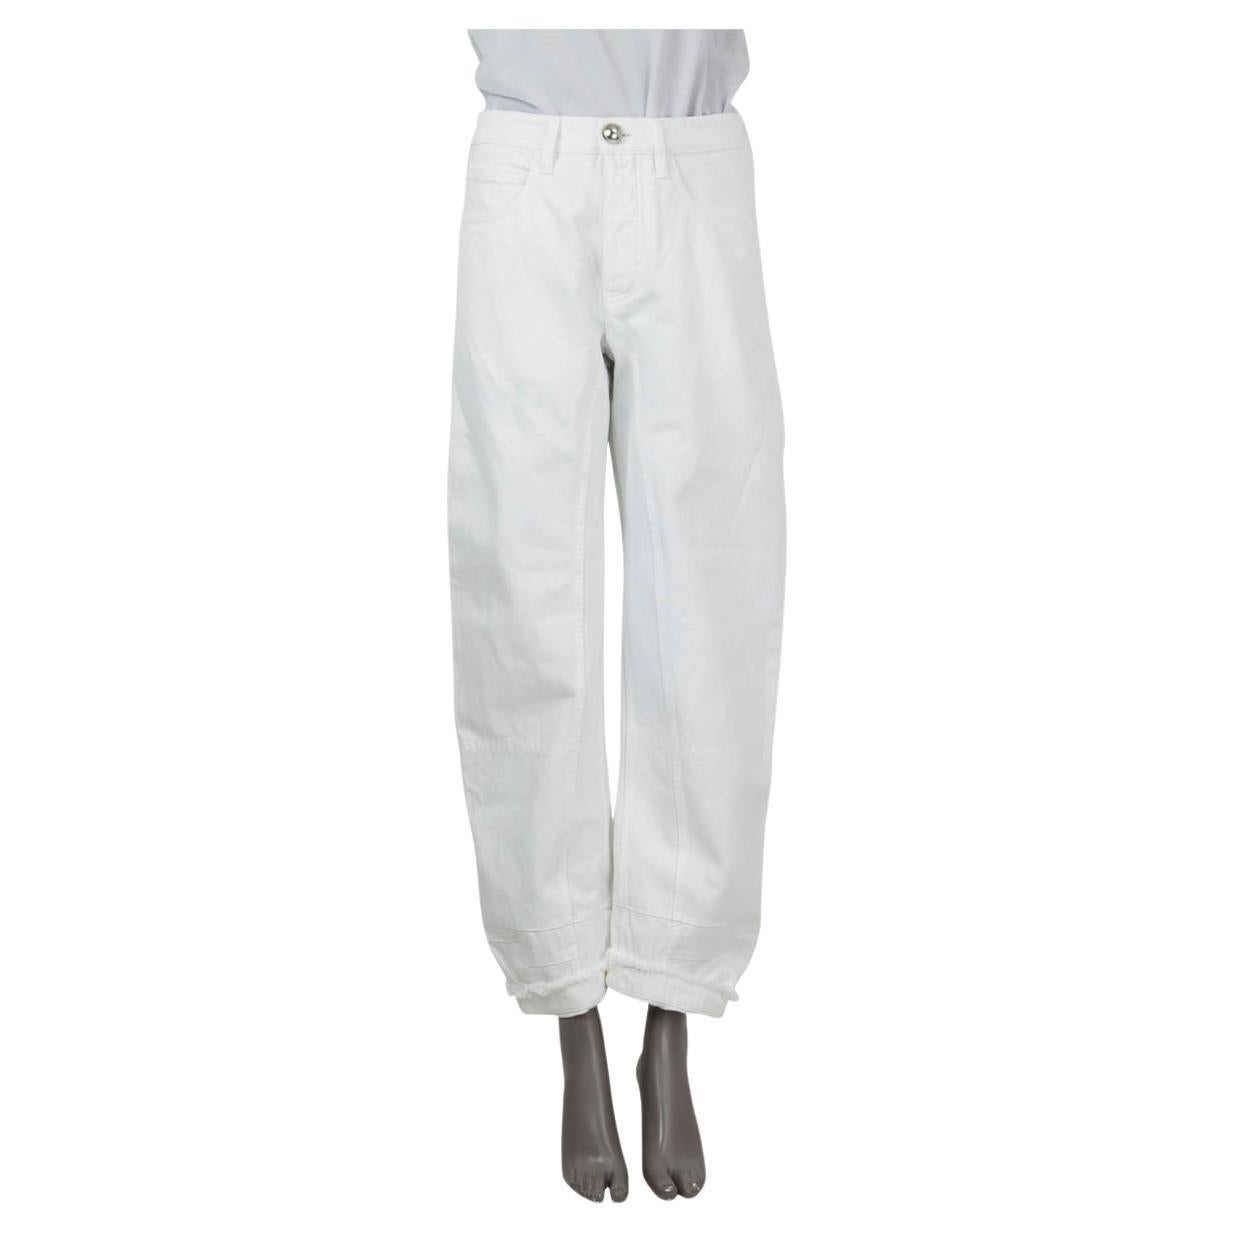 JIL SANDER white cotton denim FRINGED BARREL LEG Pants 34 XS